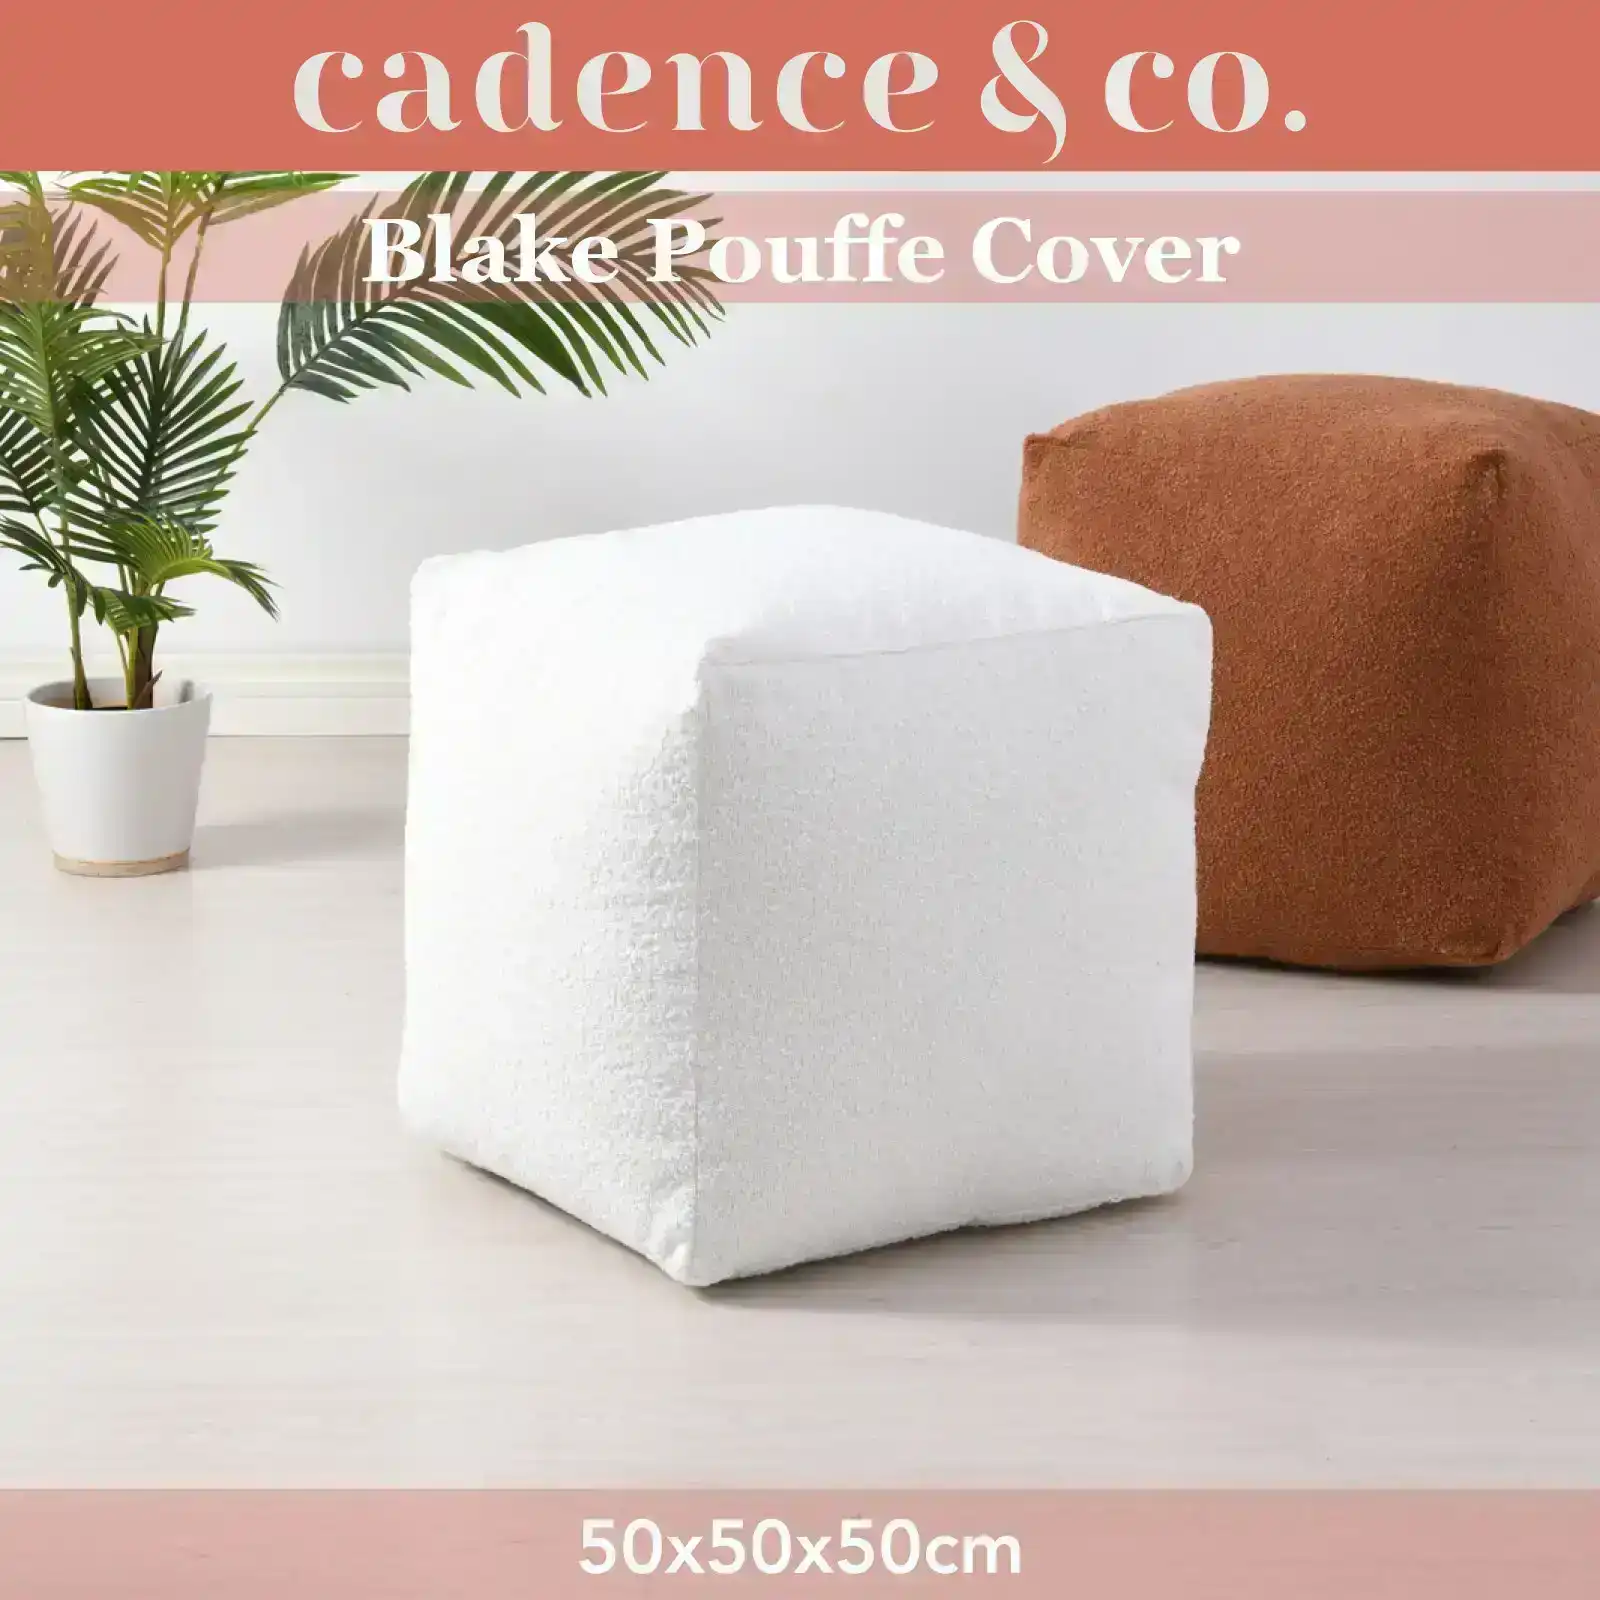 Cadence & Co. Blake Boucle Pouffe Cover Ivory 50x50x50cm